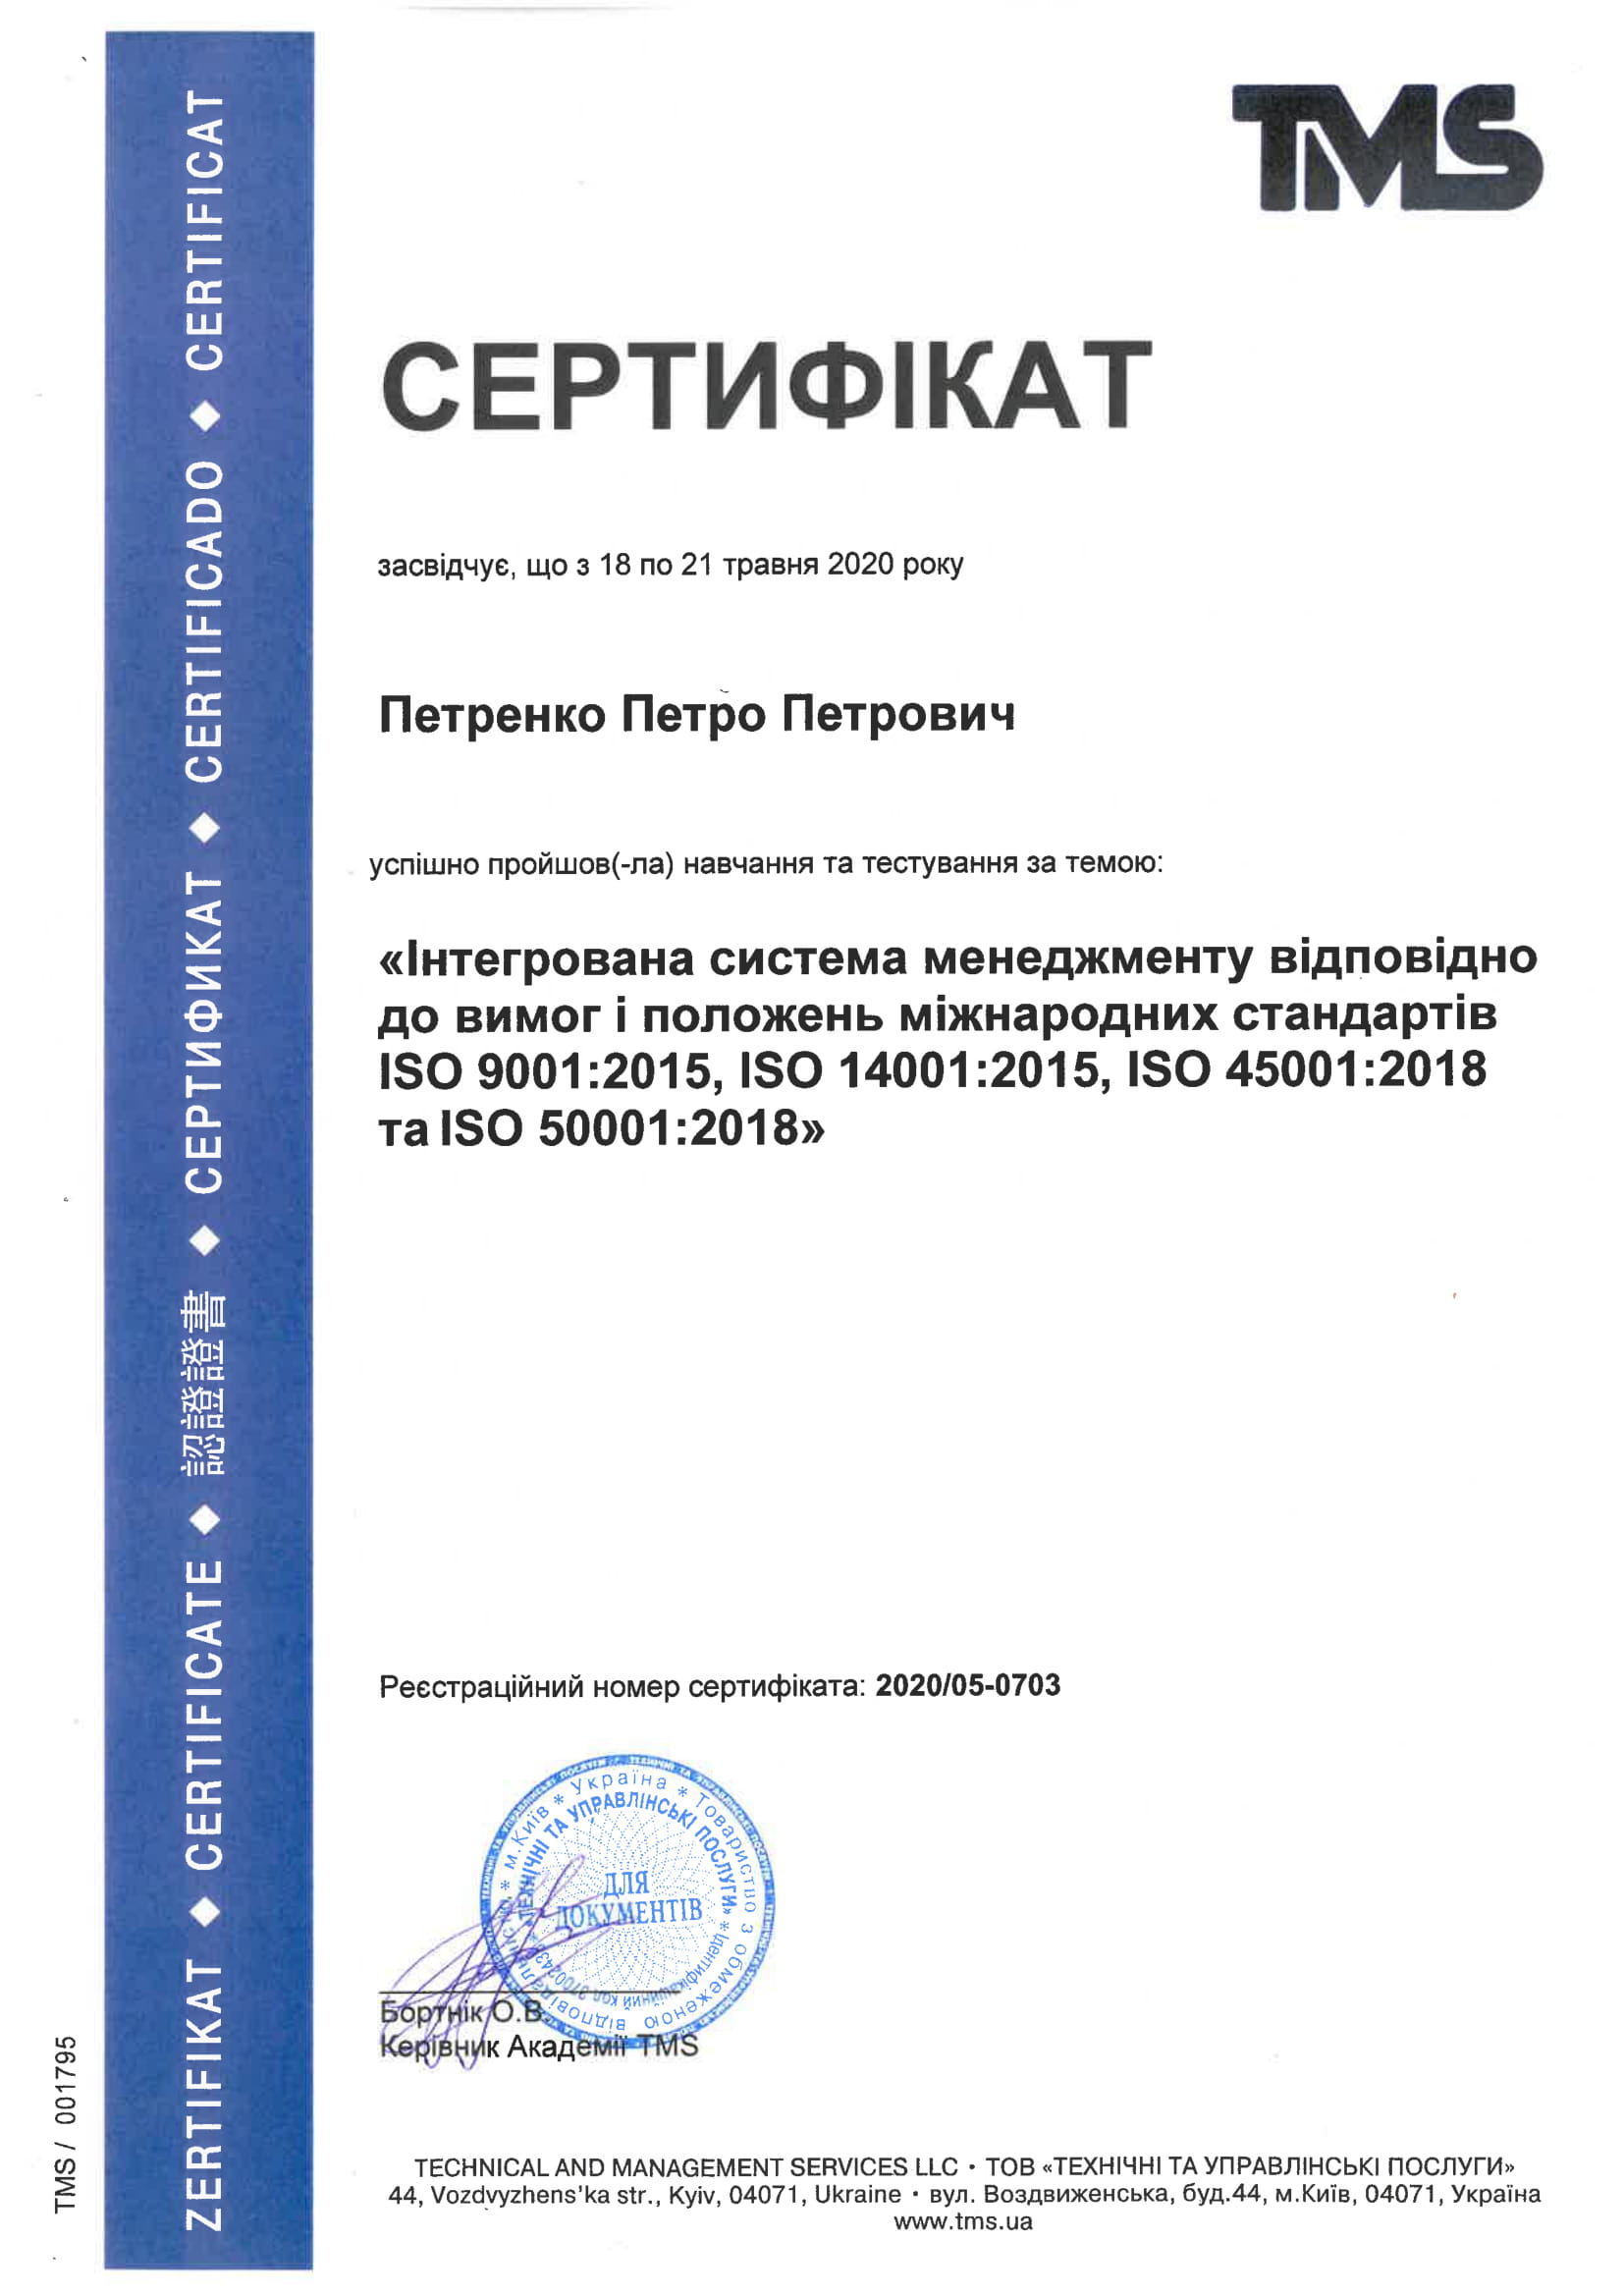 Пример сертификата о прохождении обучения по ISO 9001:2015 ISO 14001:2015 ISO 45001:2018 ISO 50001:2018